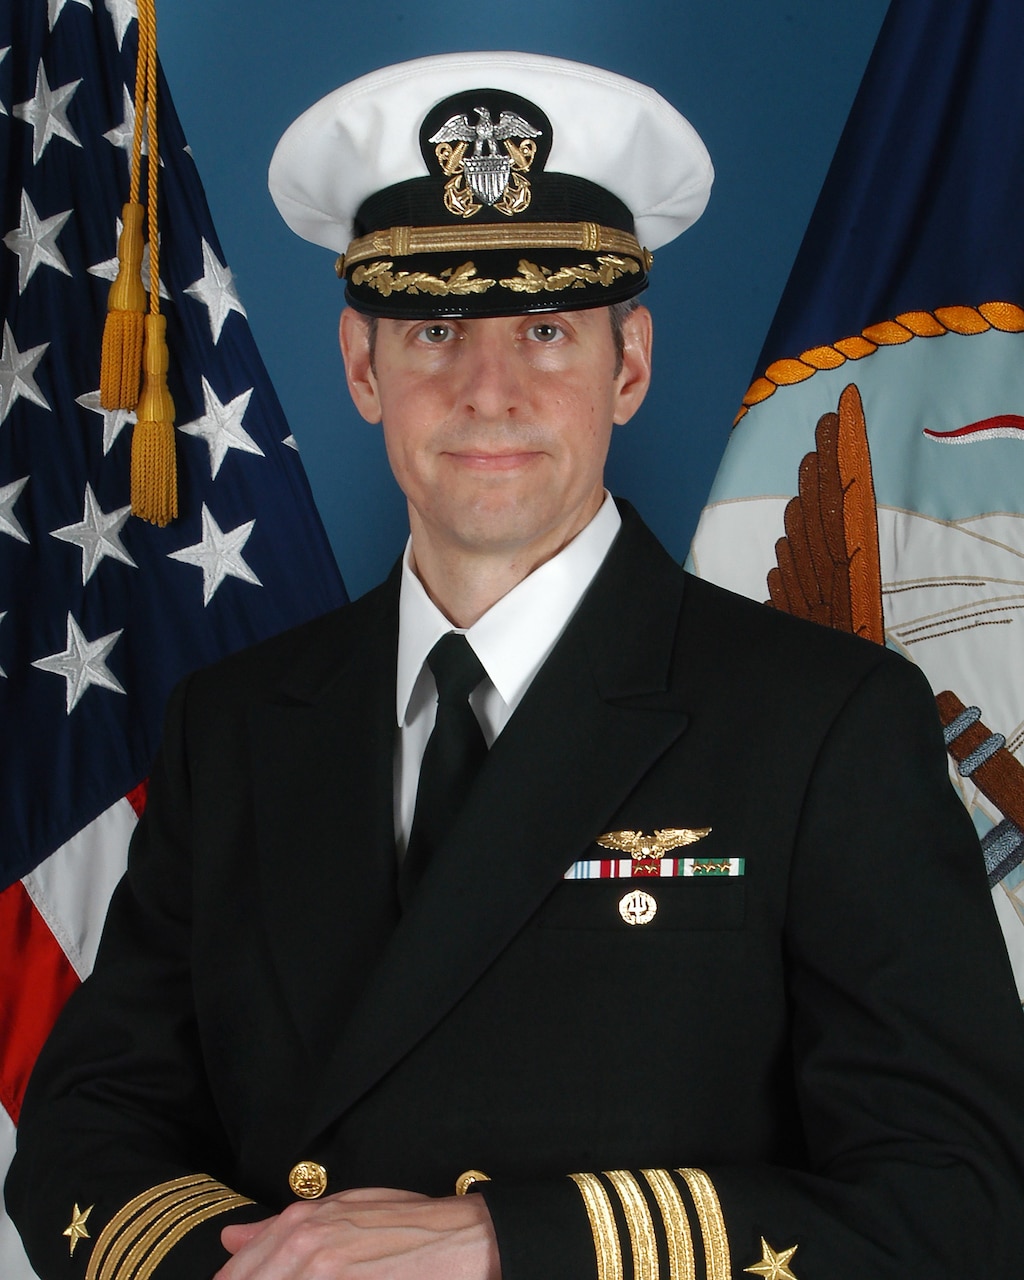 Official Studio portrait of Capt. Derek R. Fix, Chief of Staff, Carrier Strike Group 12